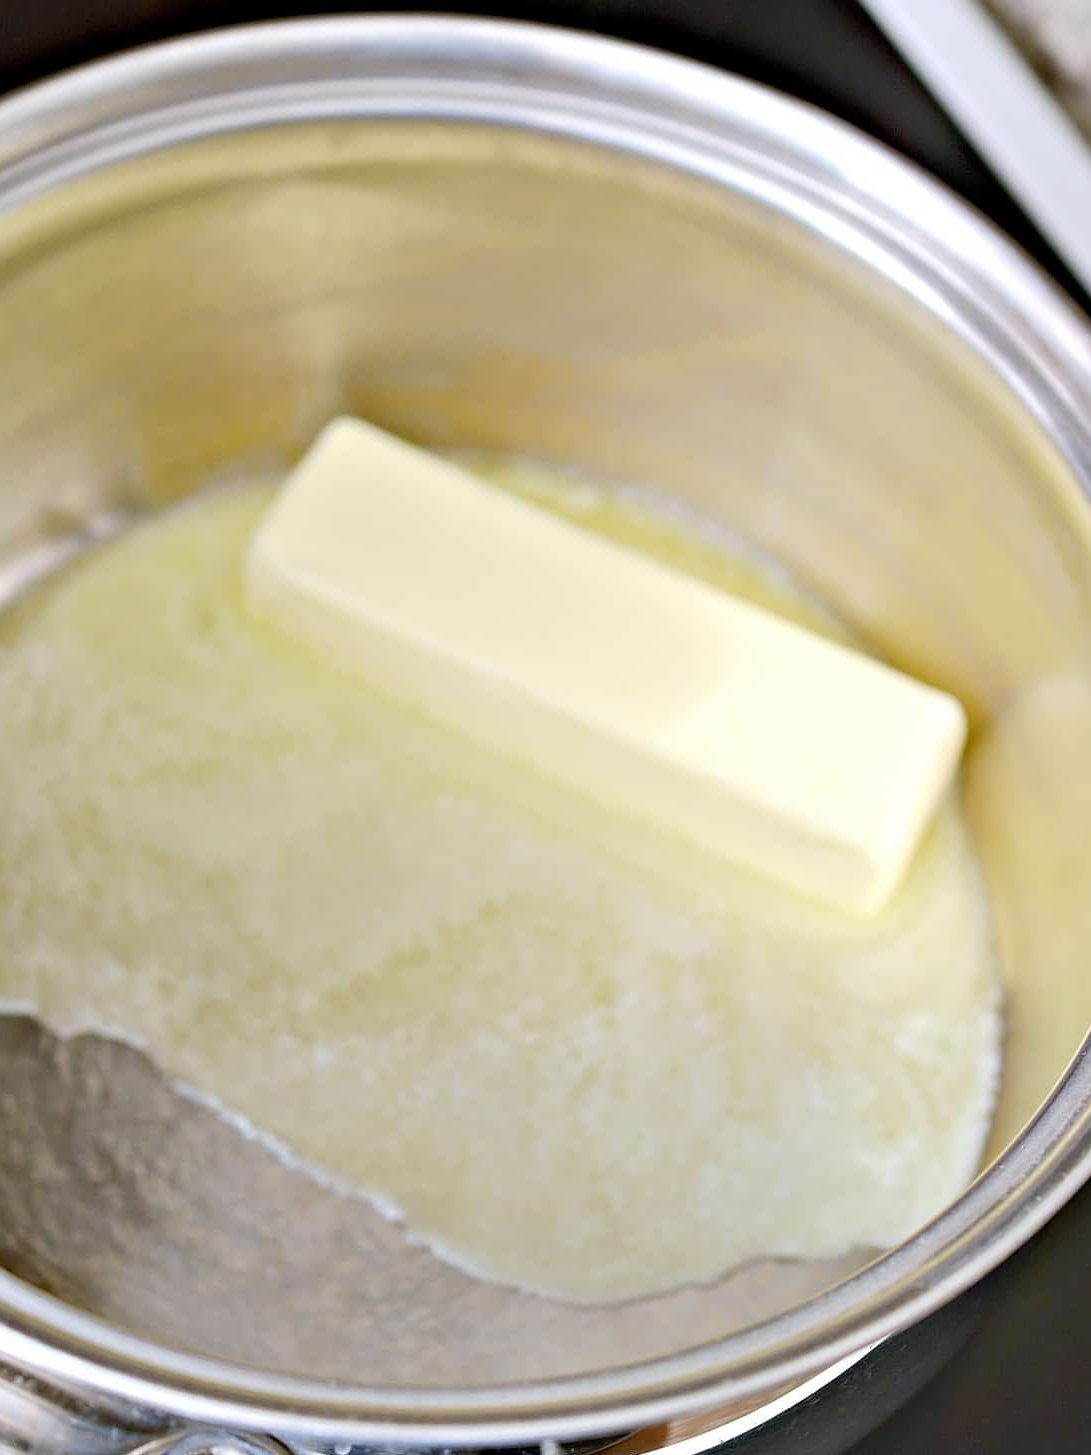 In a saucepan over medium-high heat on the stove, add 8 tbsp butter.